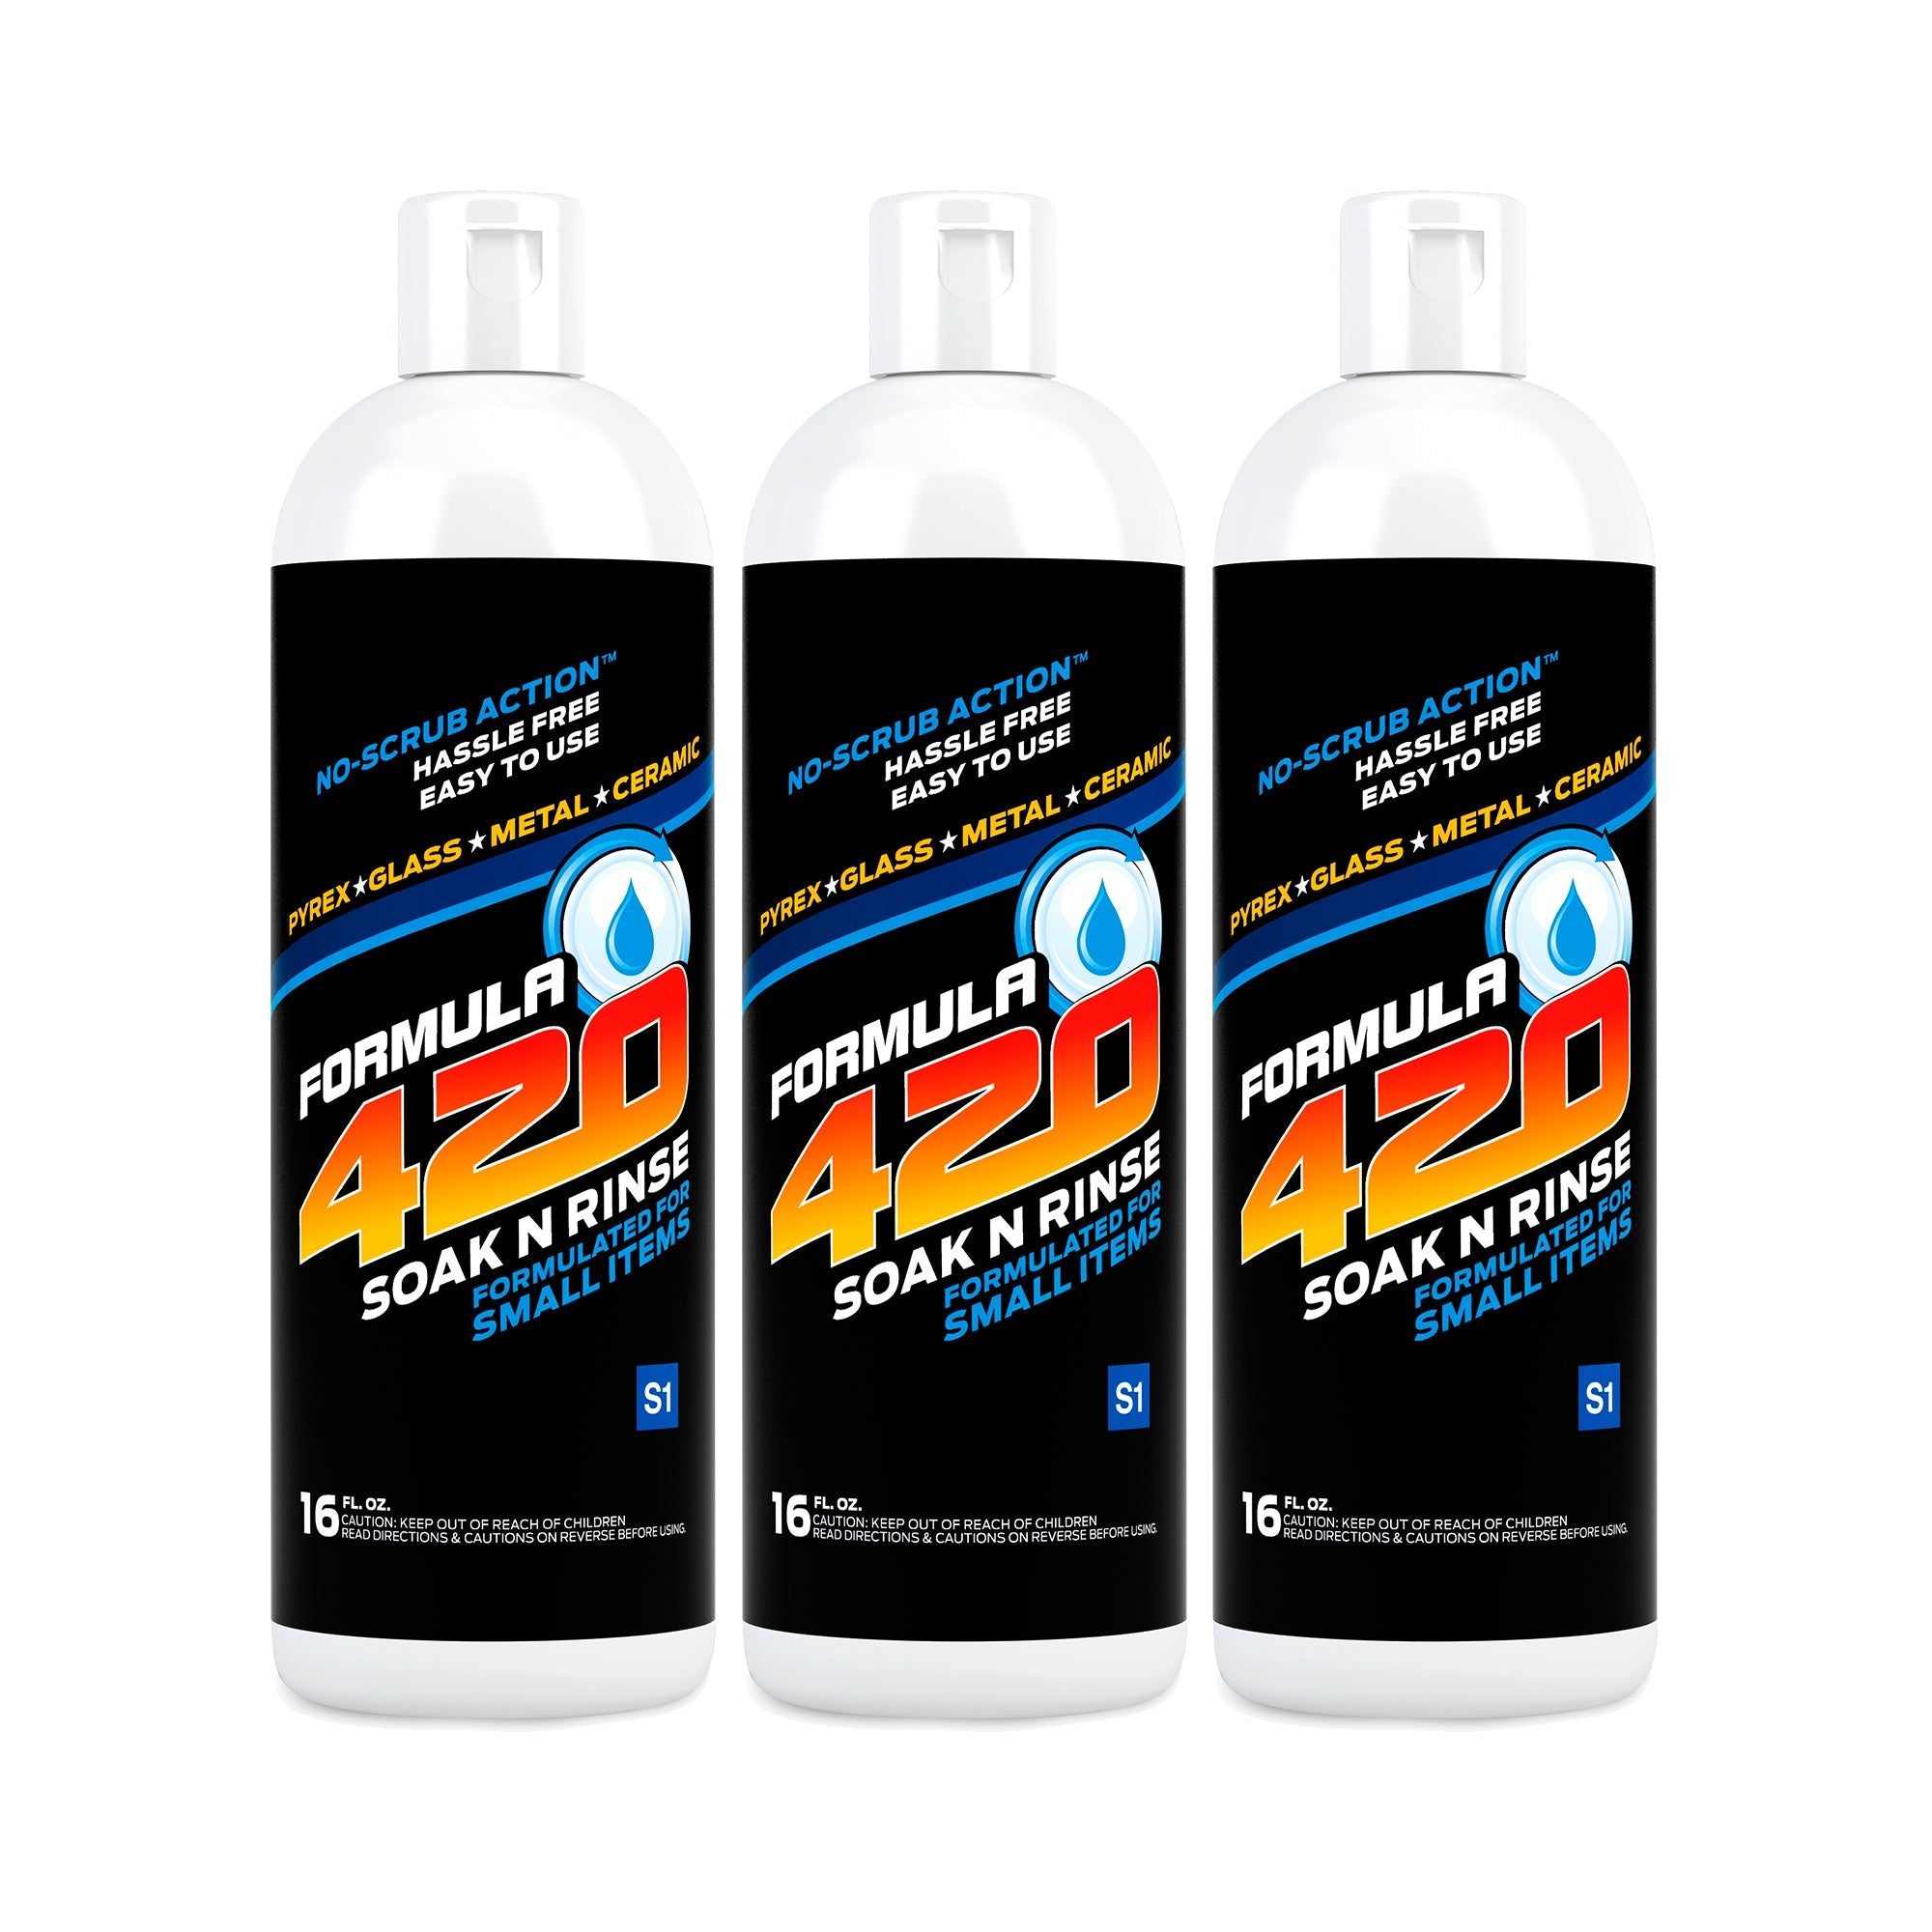 A1 - Formula 420 Original Cleaner / S1 - Formula 420 Soak-N-Rinse / N1 -  Smog-Out Odor Neutralizer